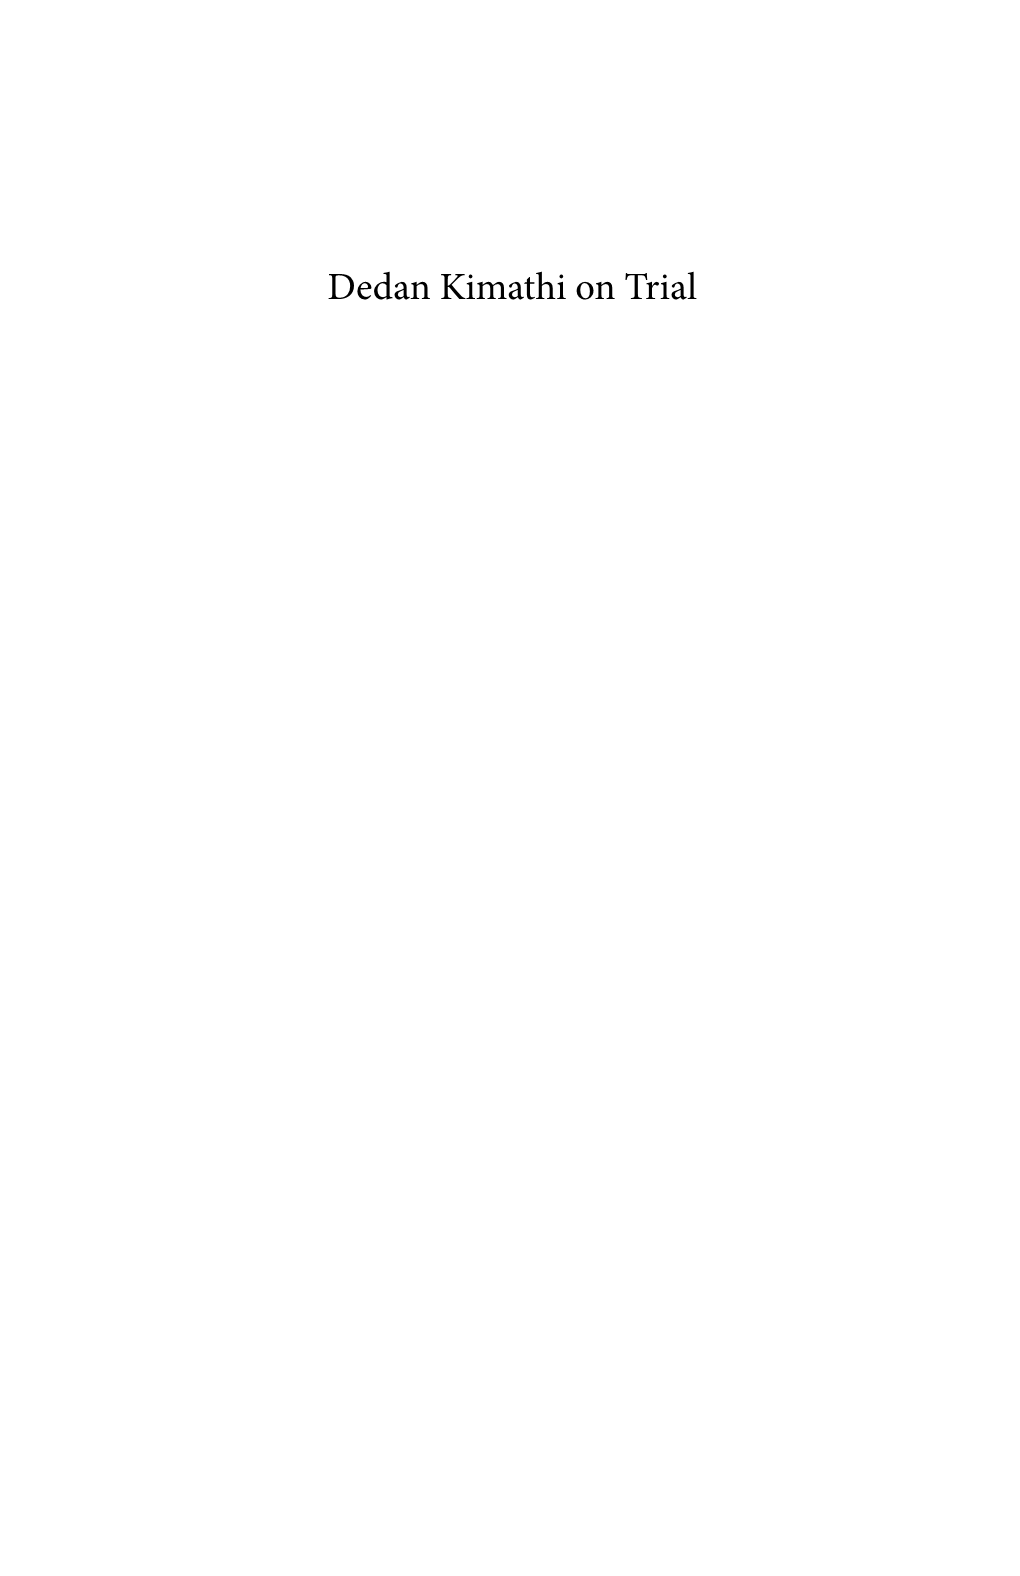 Dedan Kimathi on Trial Contents